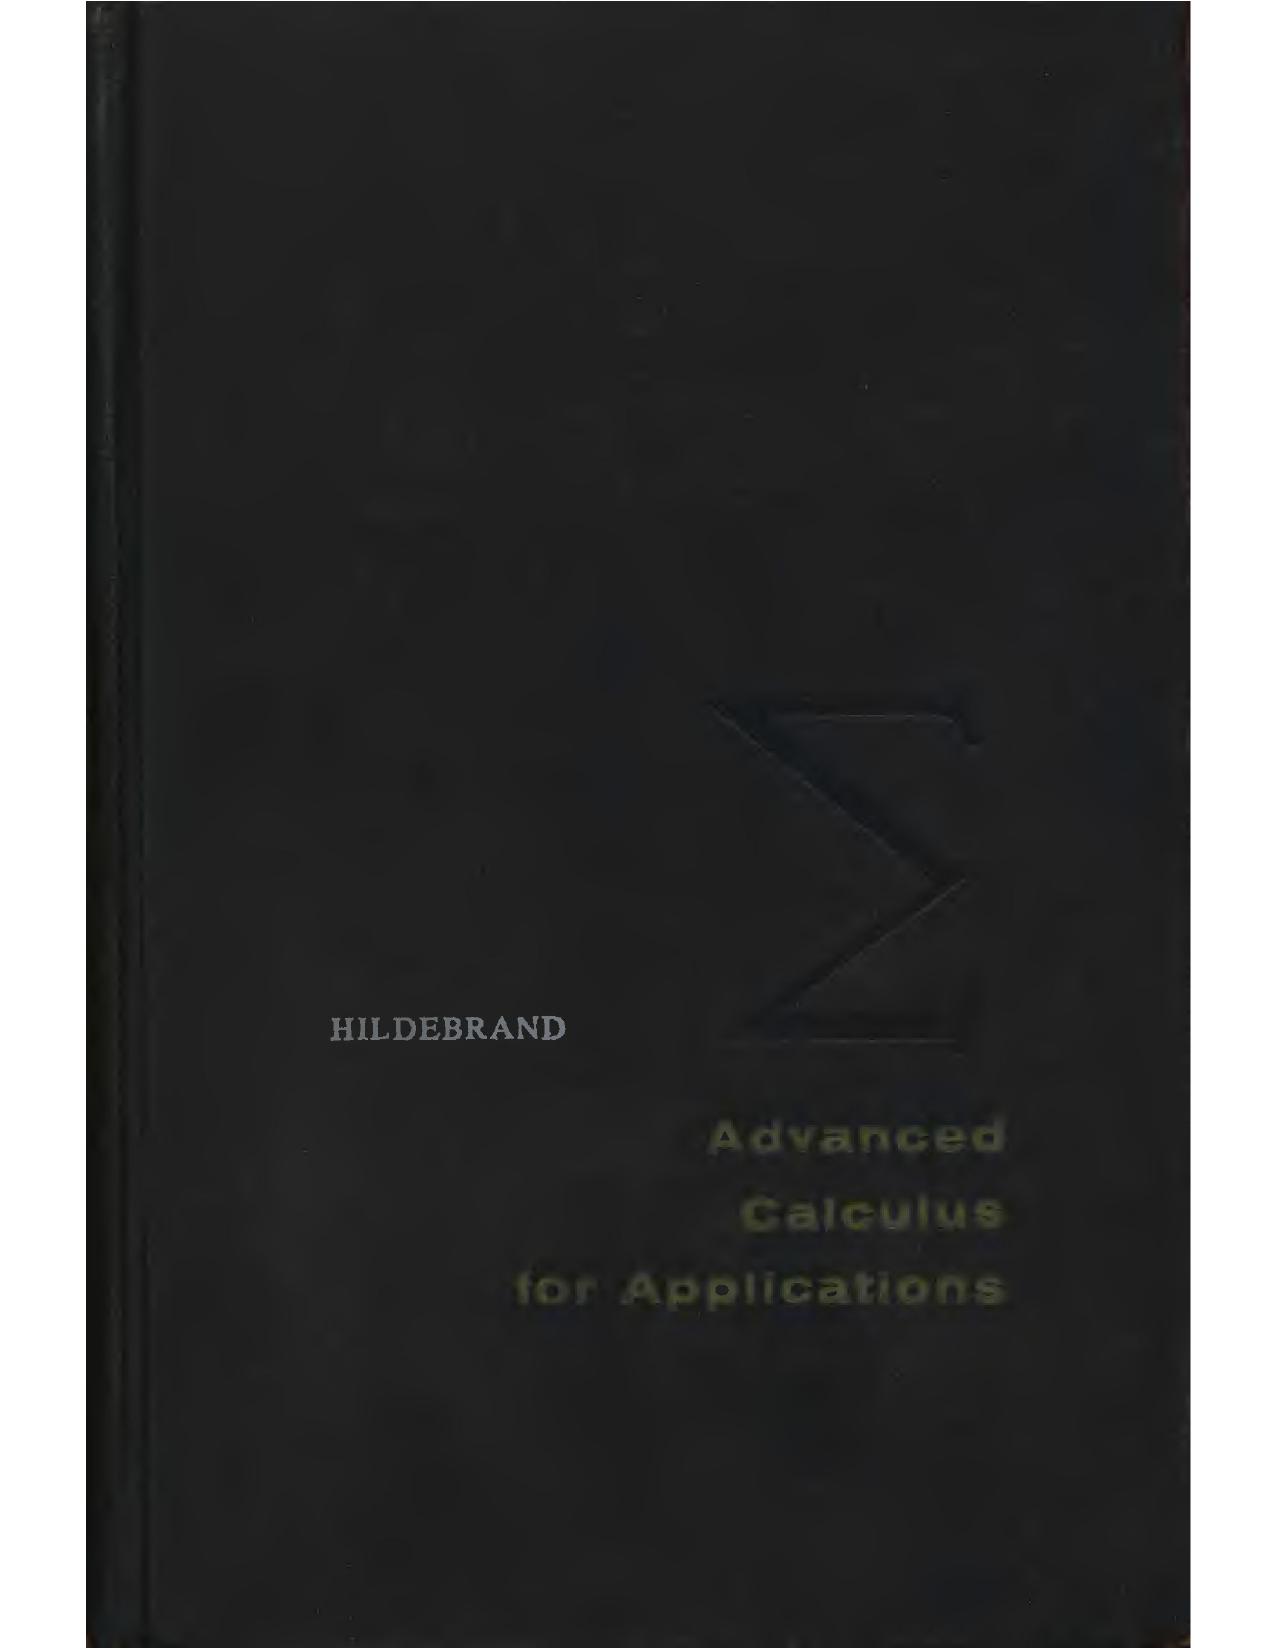 Advanced.Calculus.For.Applications_Hildebrand_1962.djvu